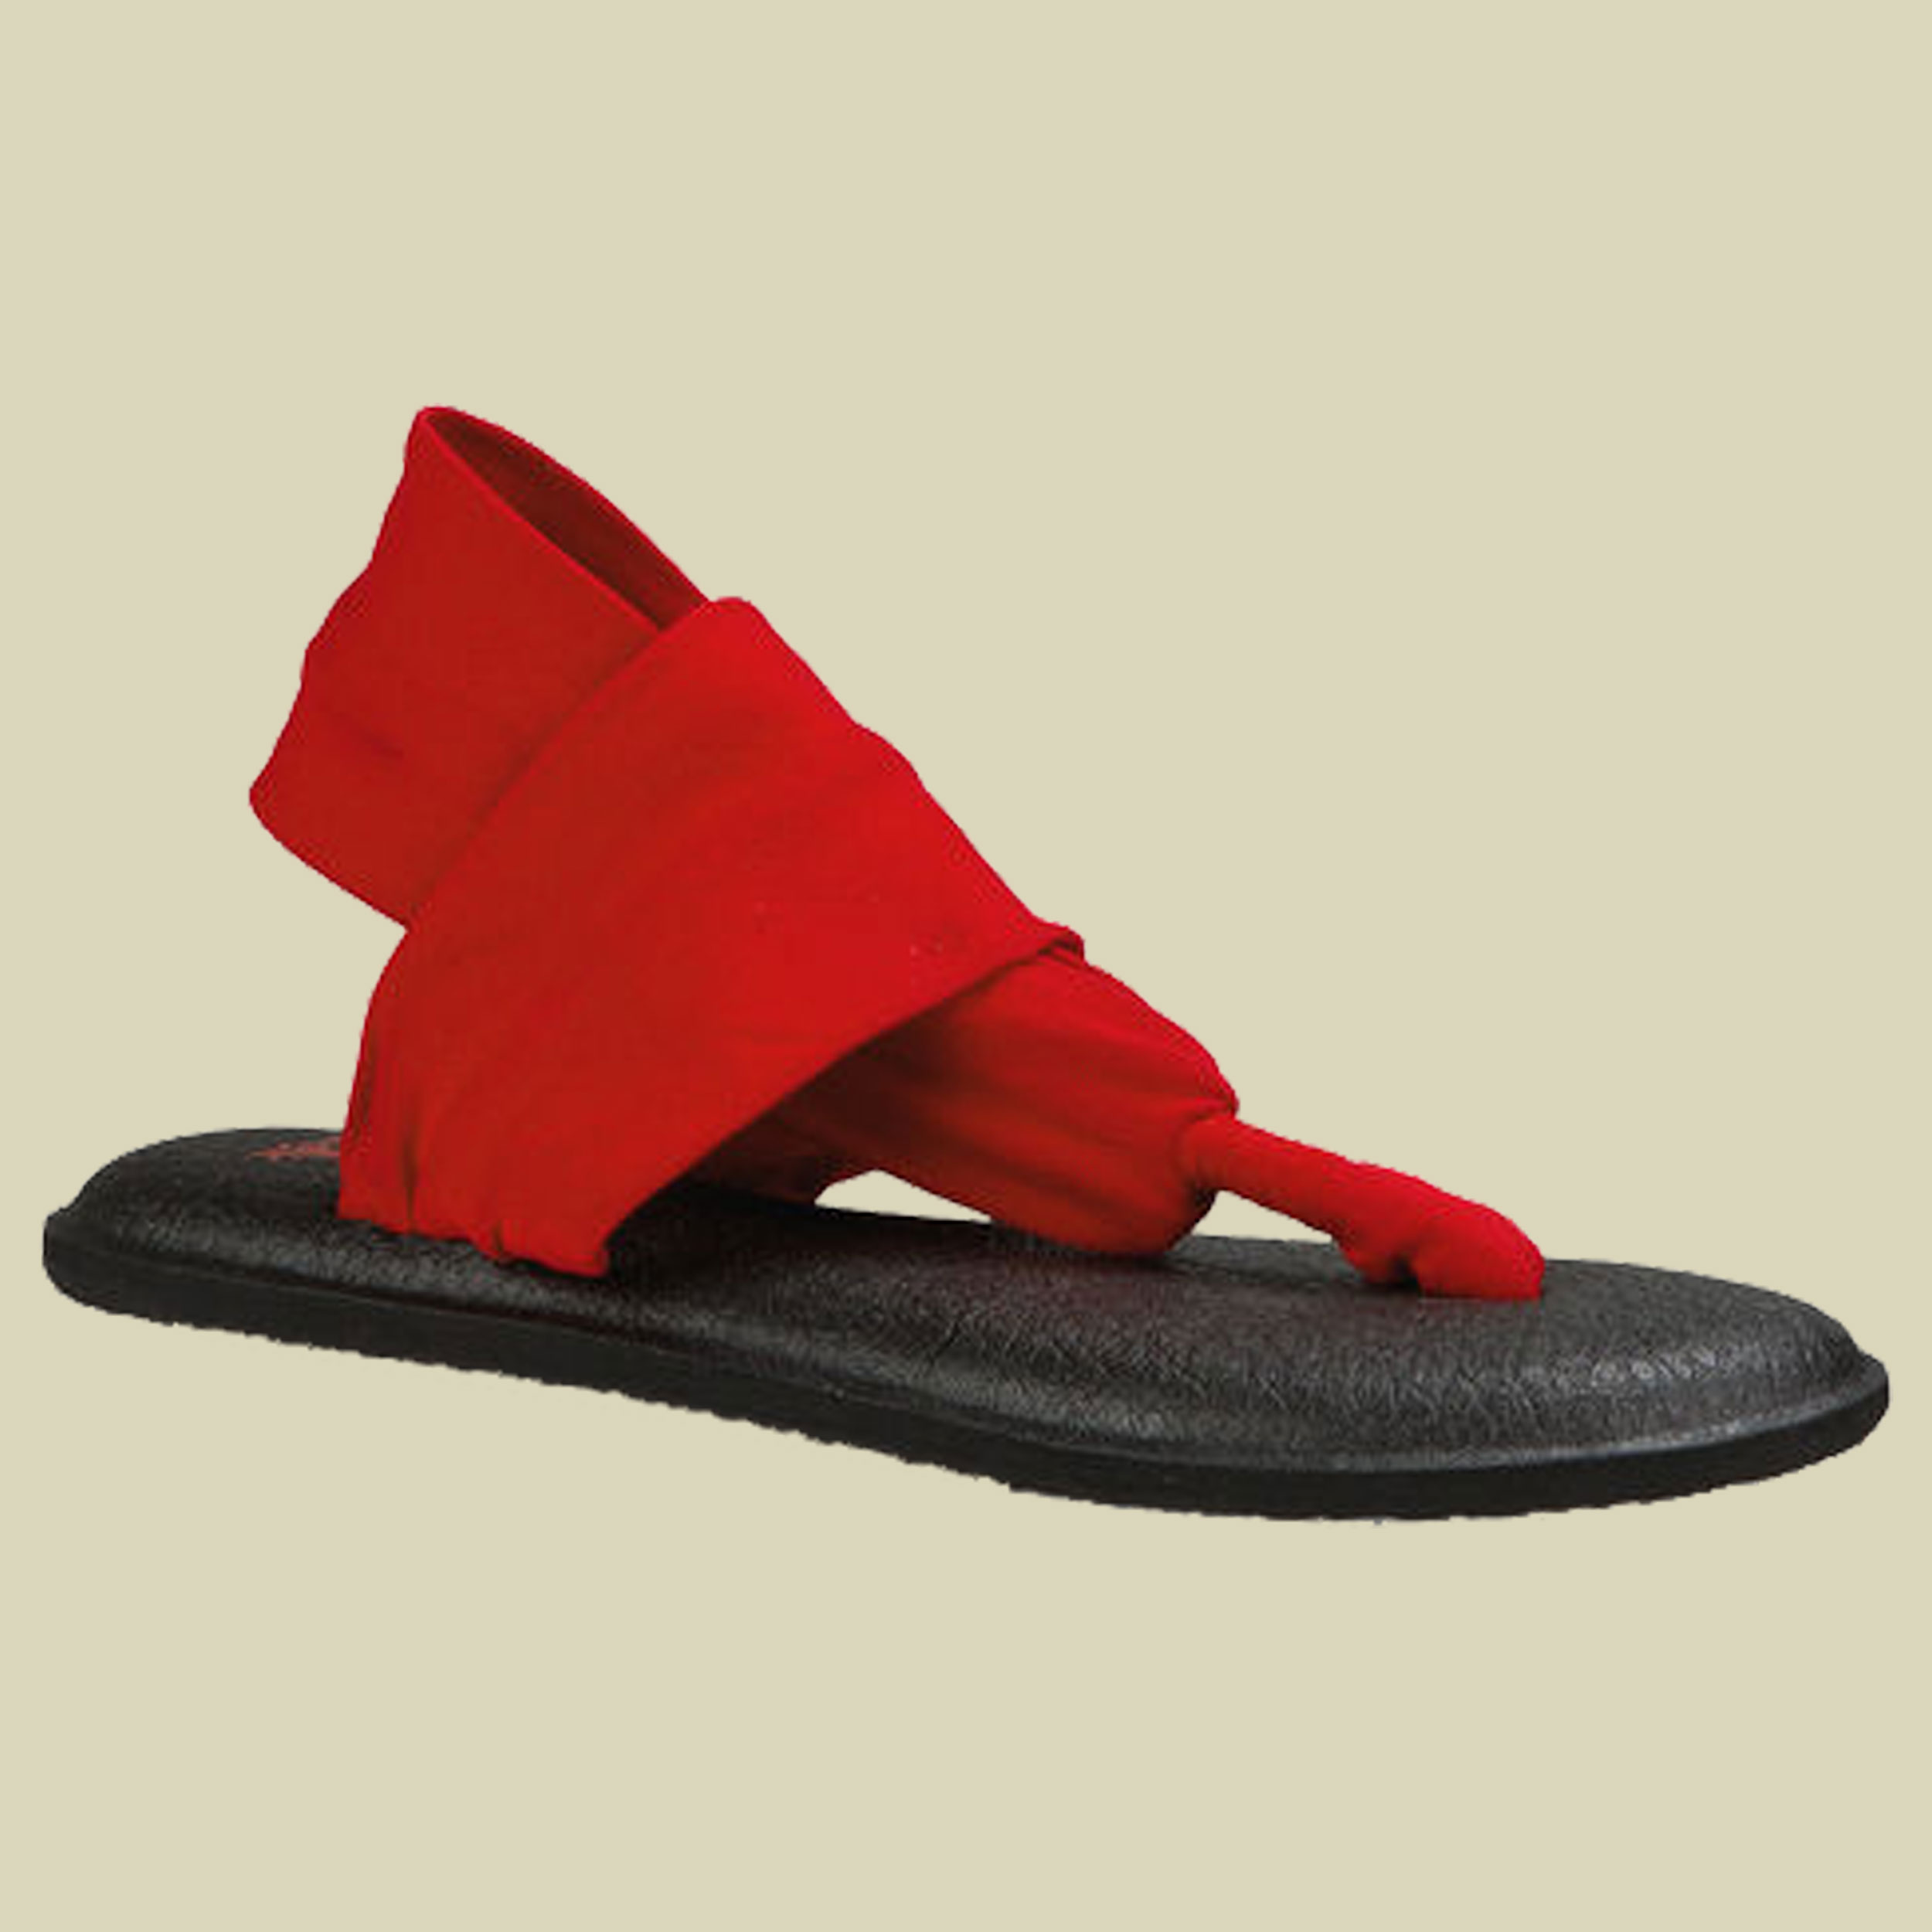 Yoga Sling 2 Sandals Women Größe UK 5 Farbe bright red